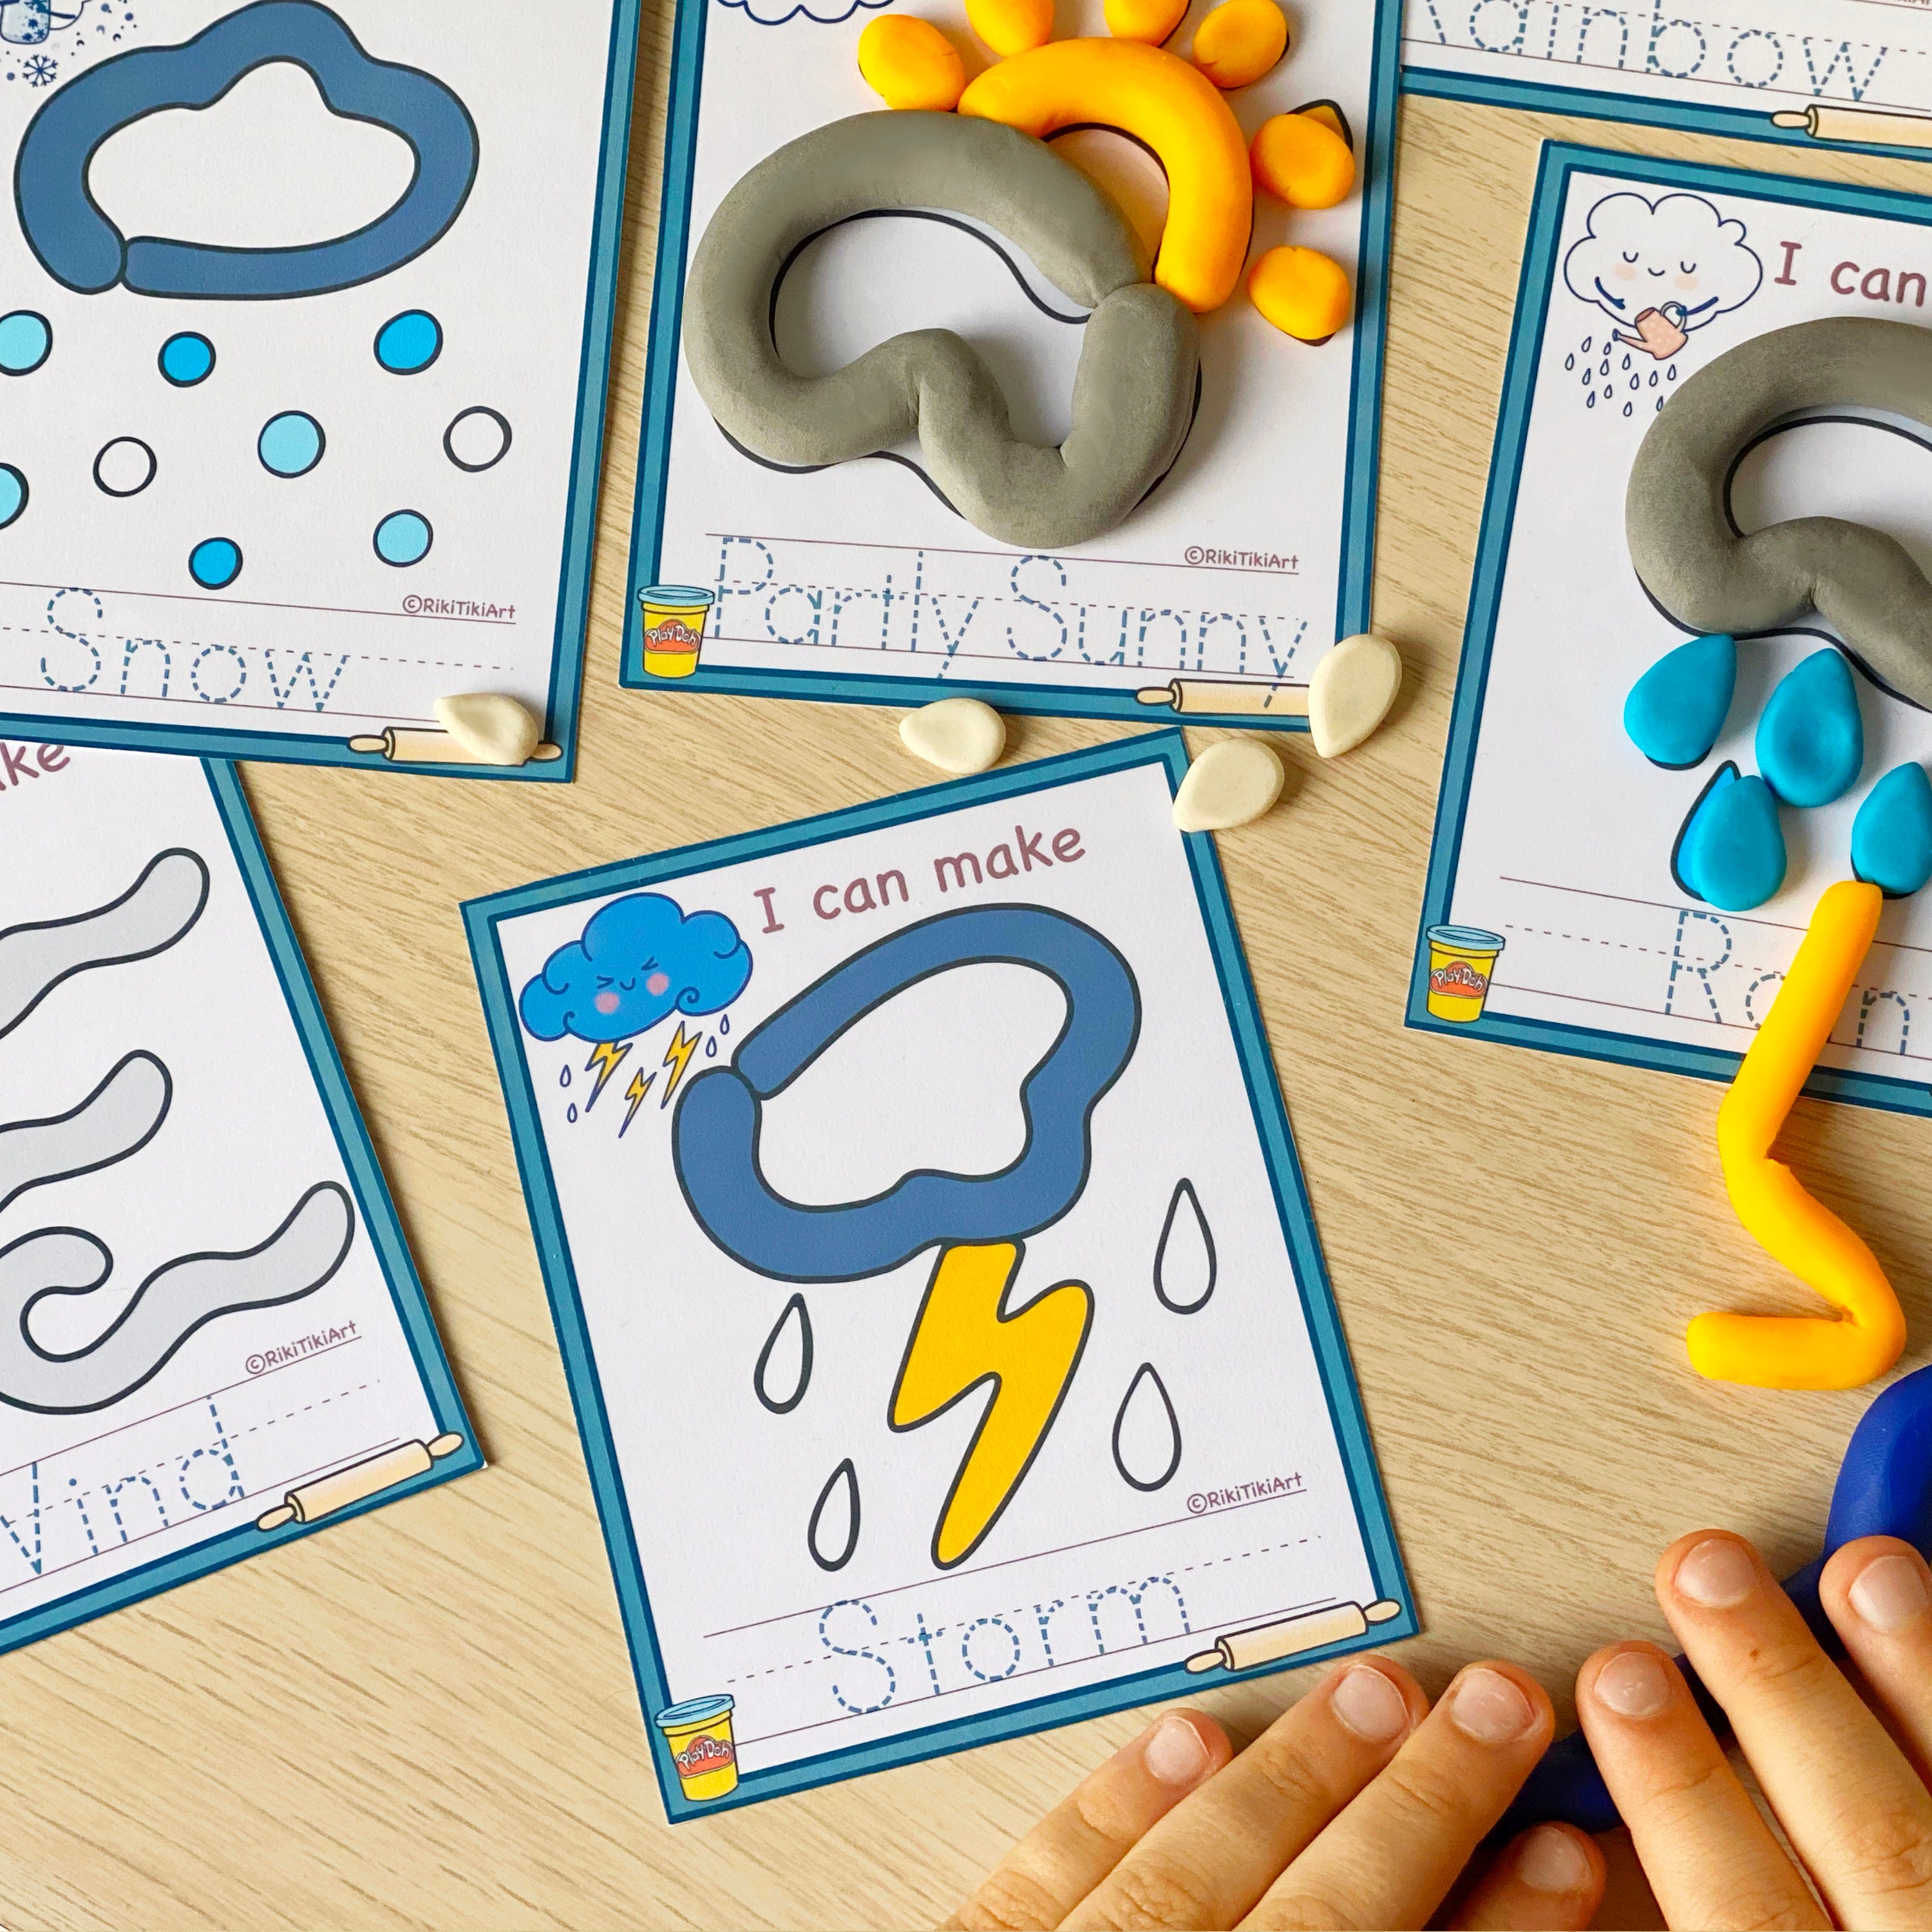 Weather Playdough Mats  Totschooling - Toddler, Preschool